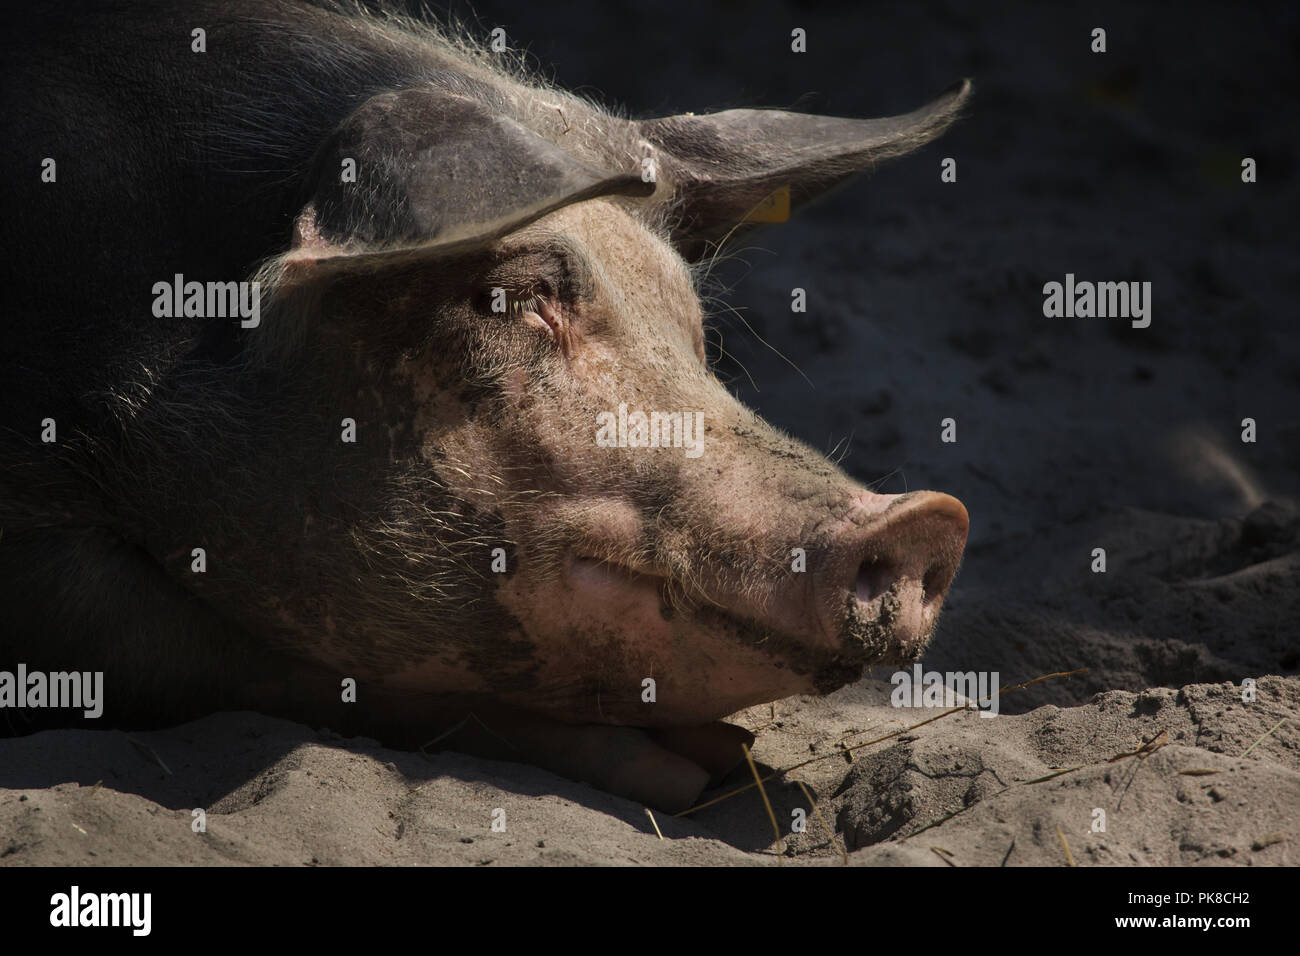 Piétrain swine (Sus scrofa f. domesticus). Stock Photo